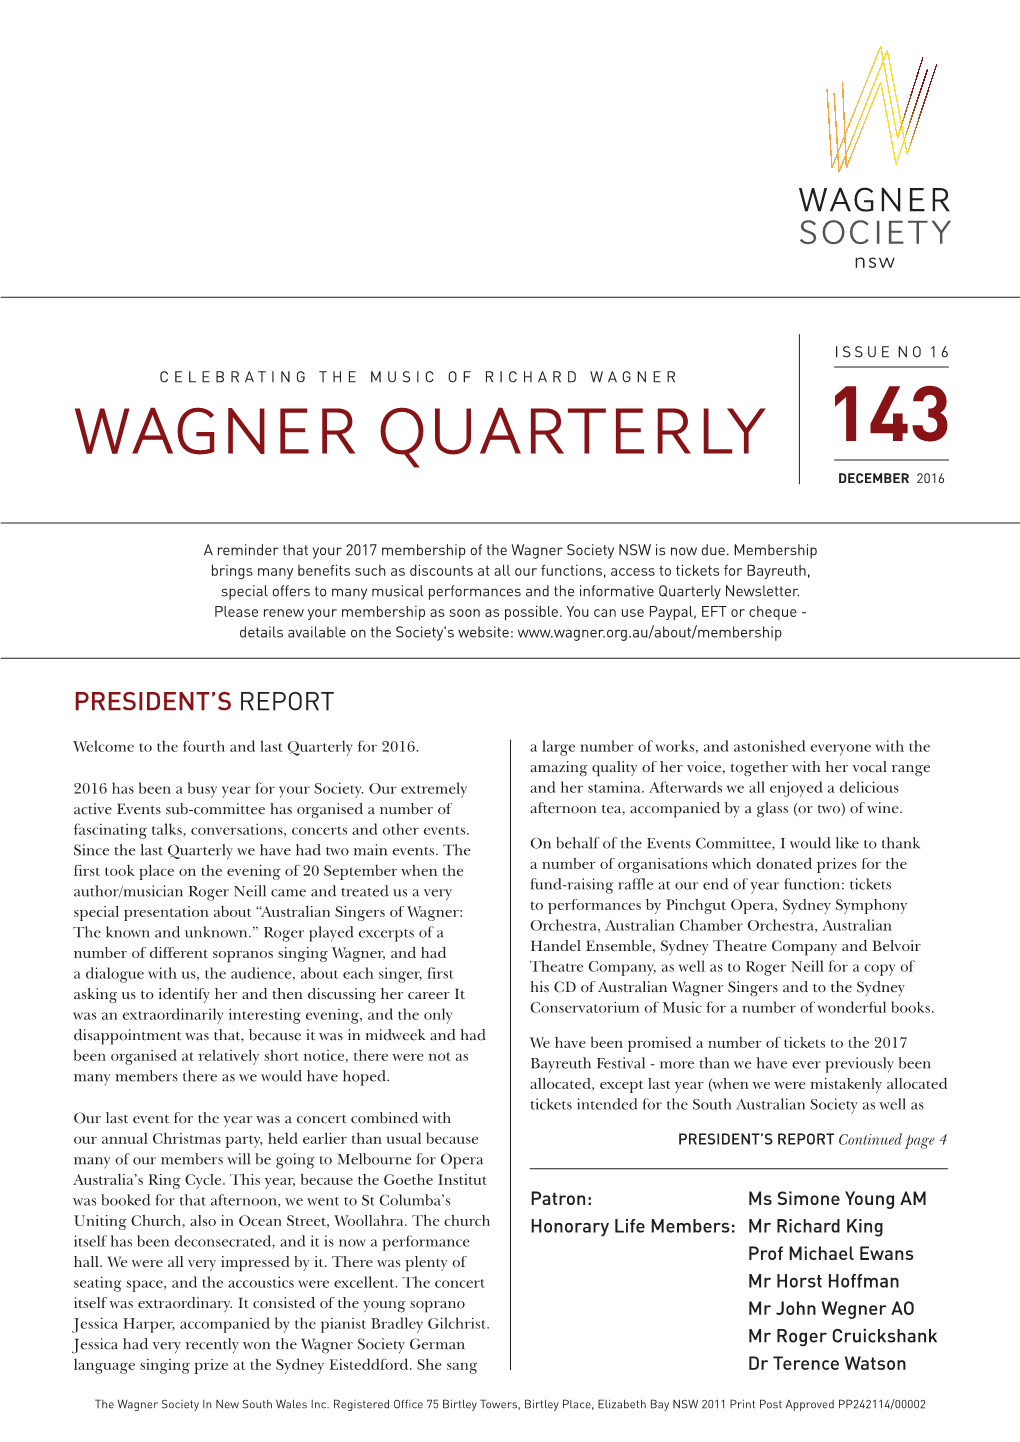 Wagner Quarterly 143 December 2016